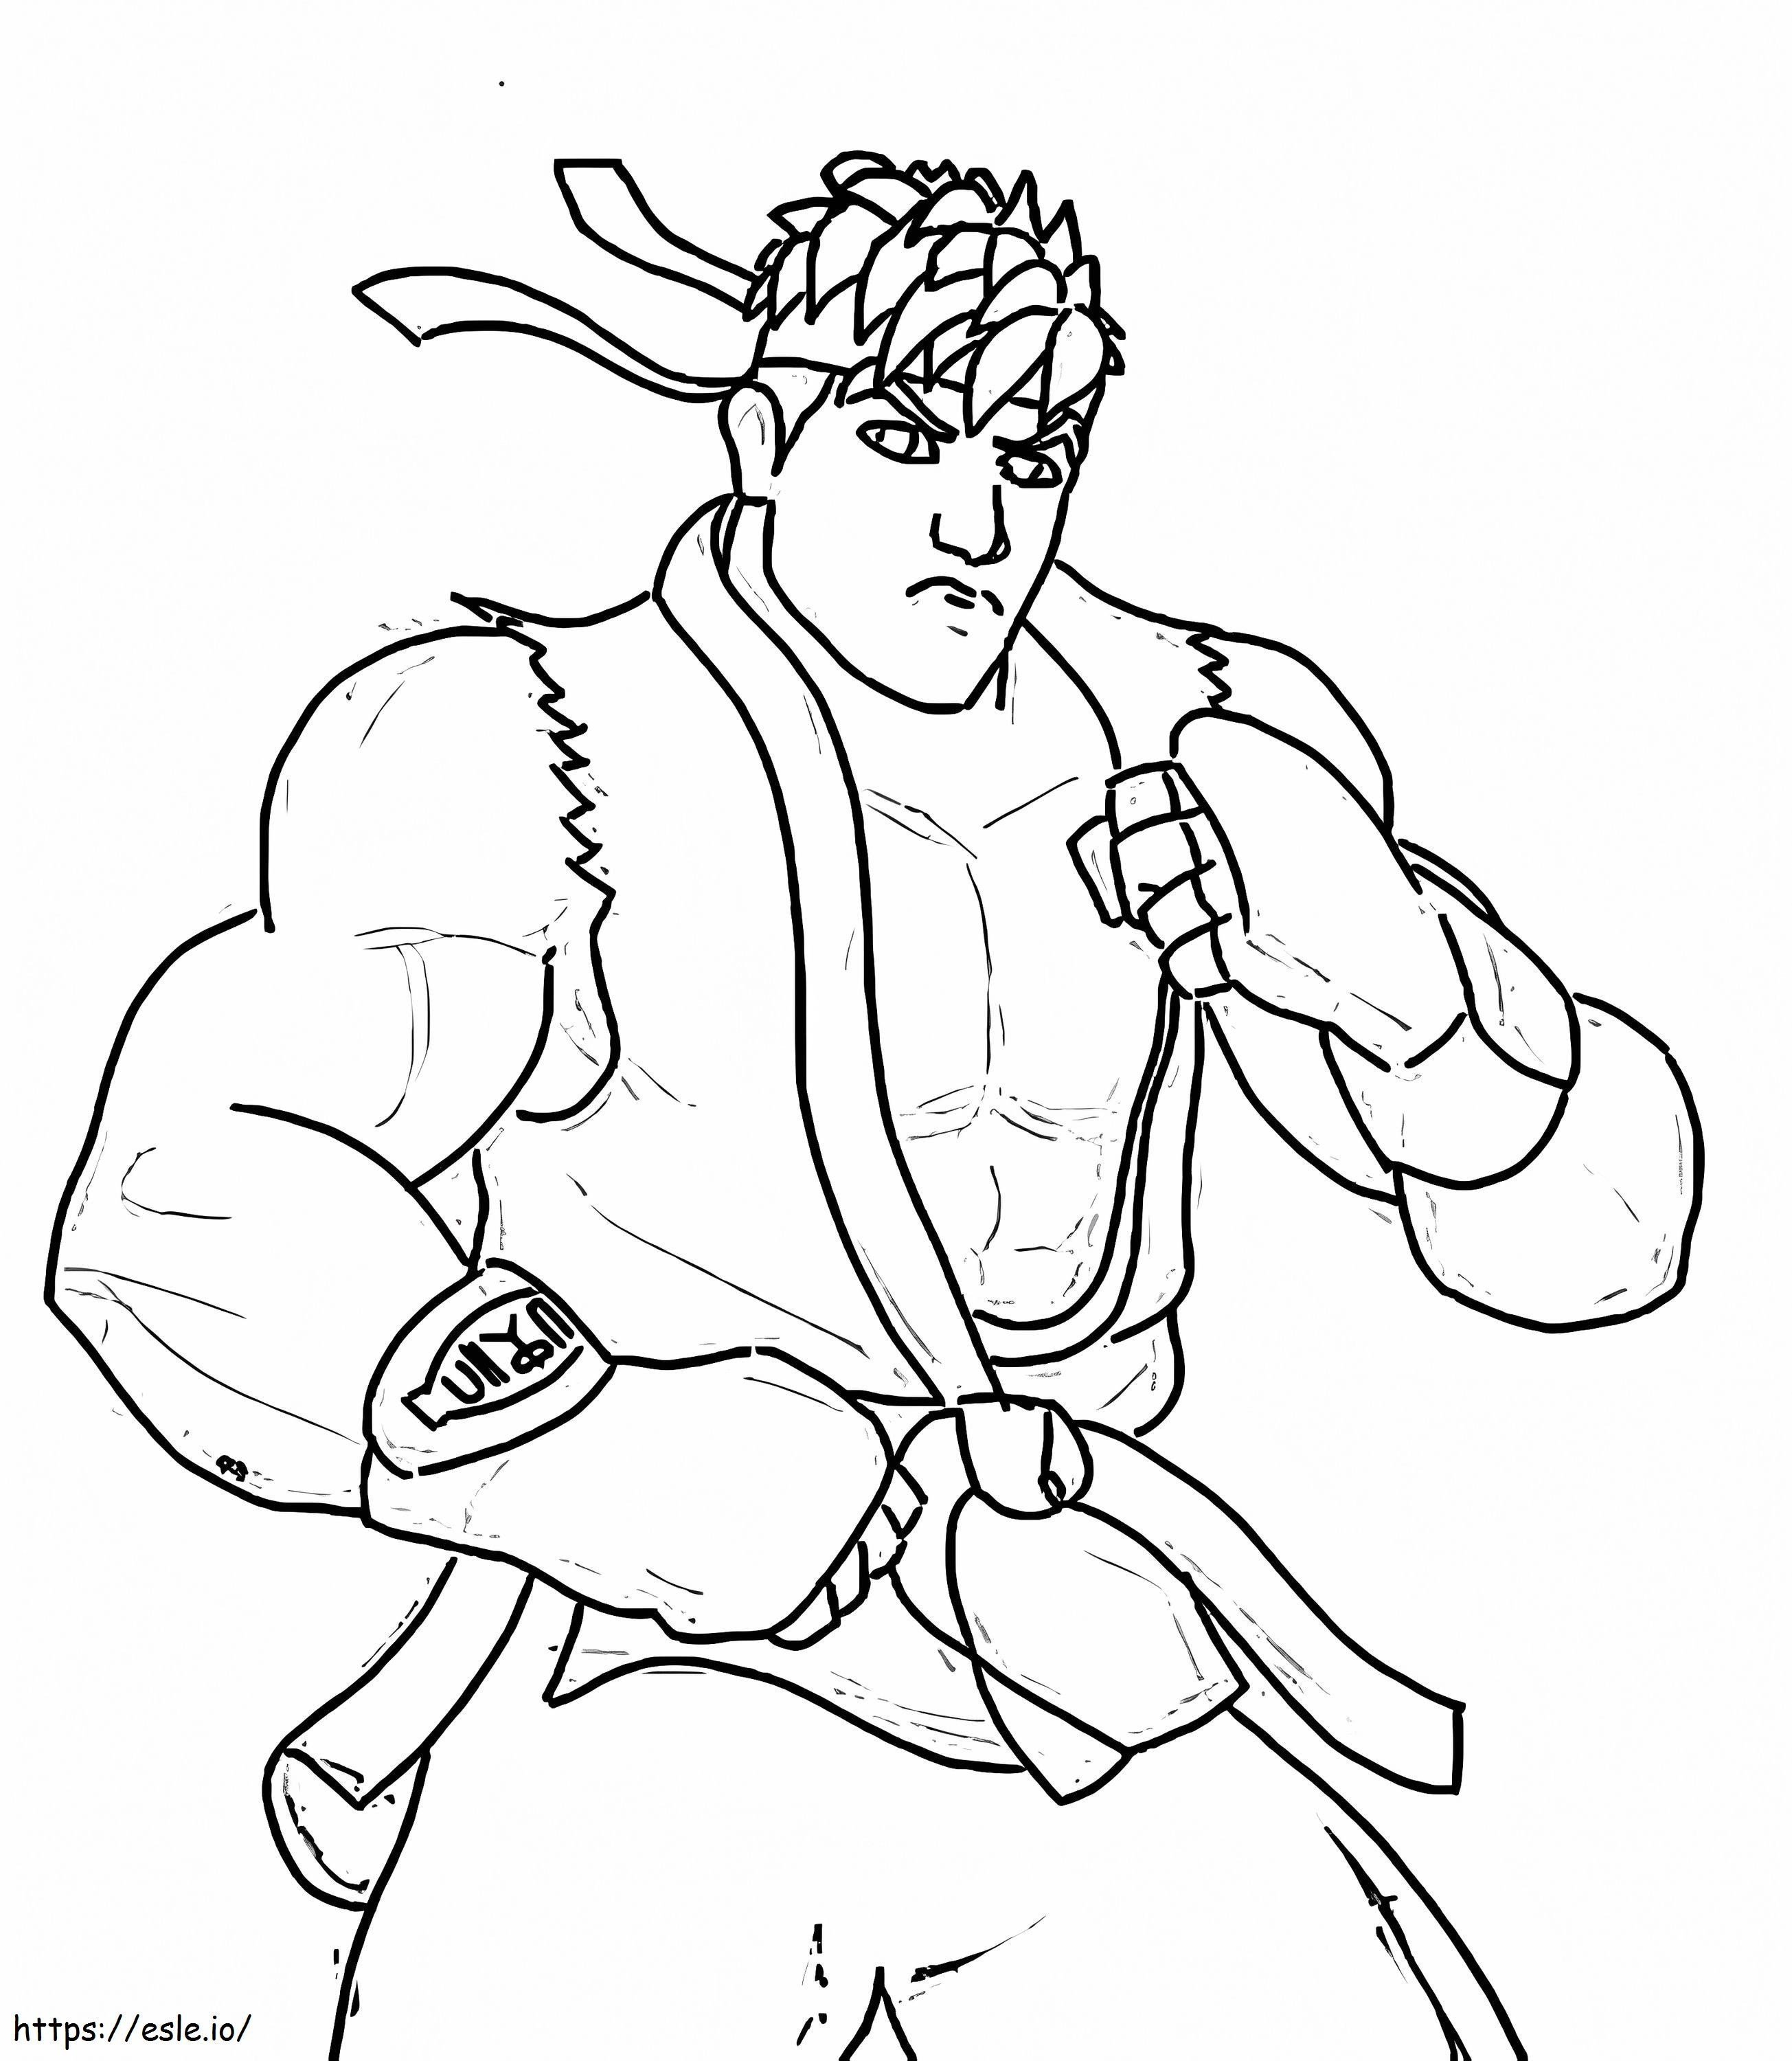 Free Printable Ryu coloring page